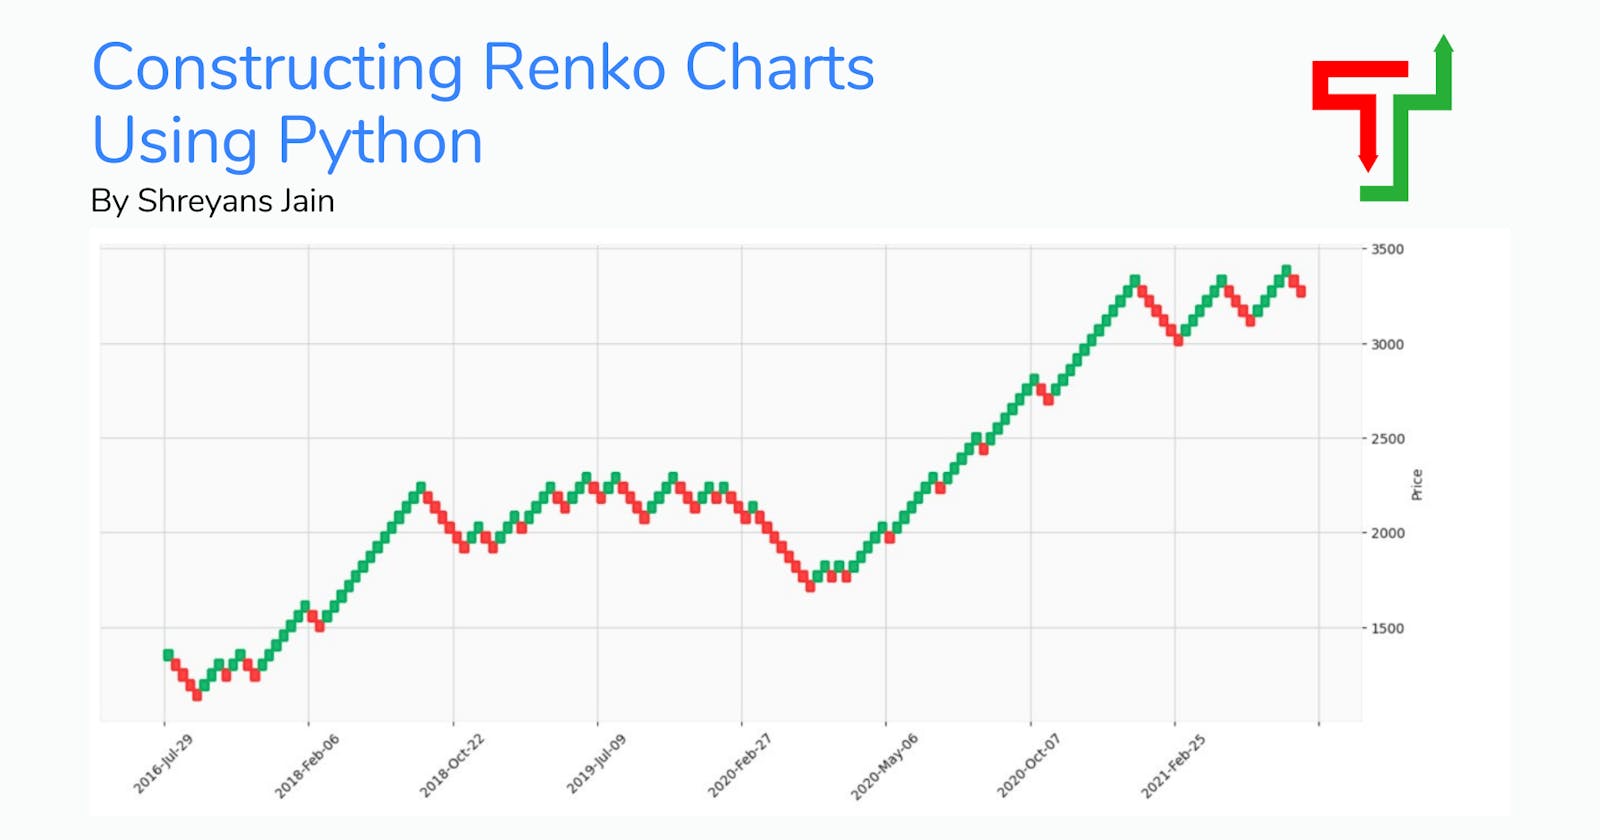 Constructing Renko Charts Using Python